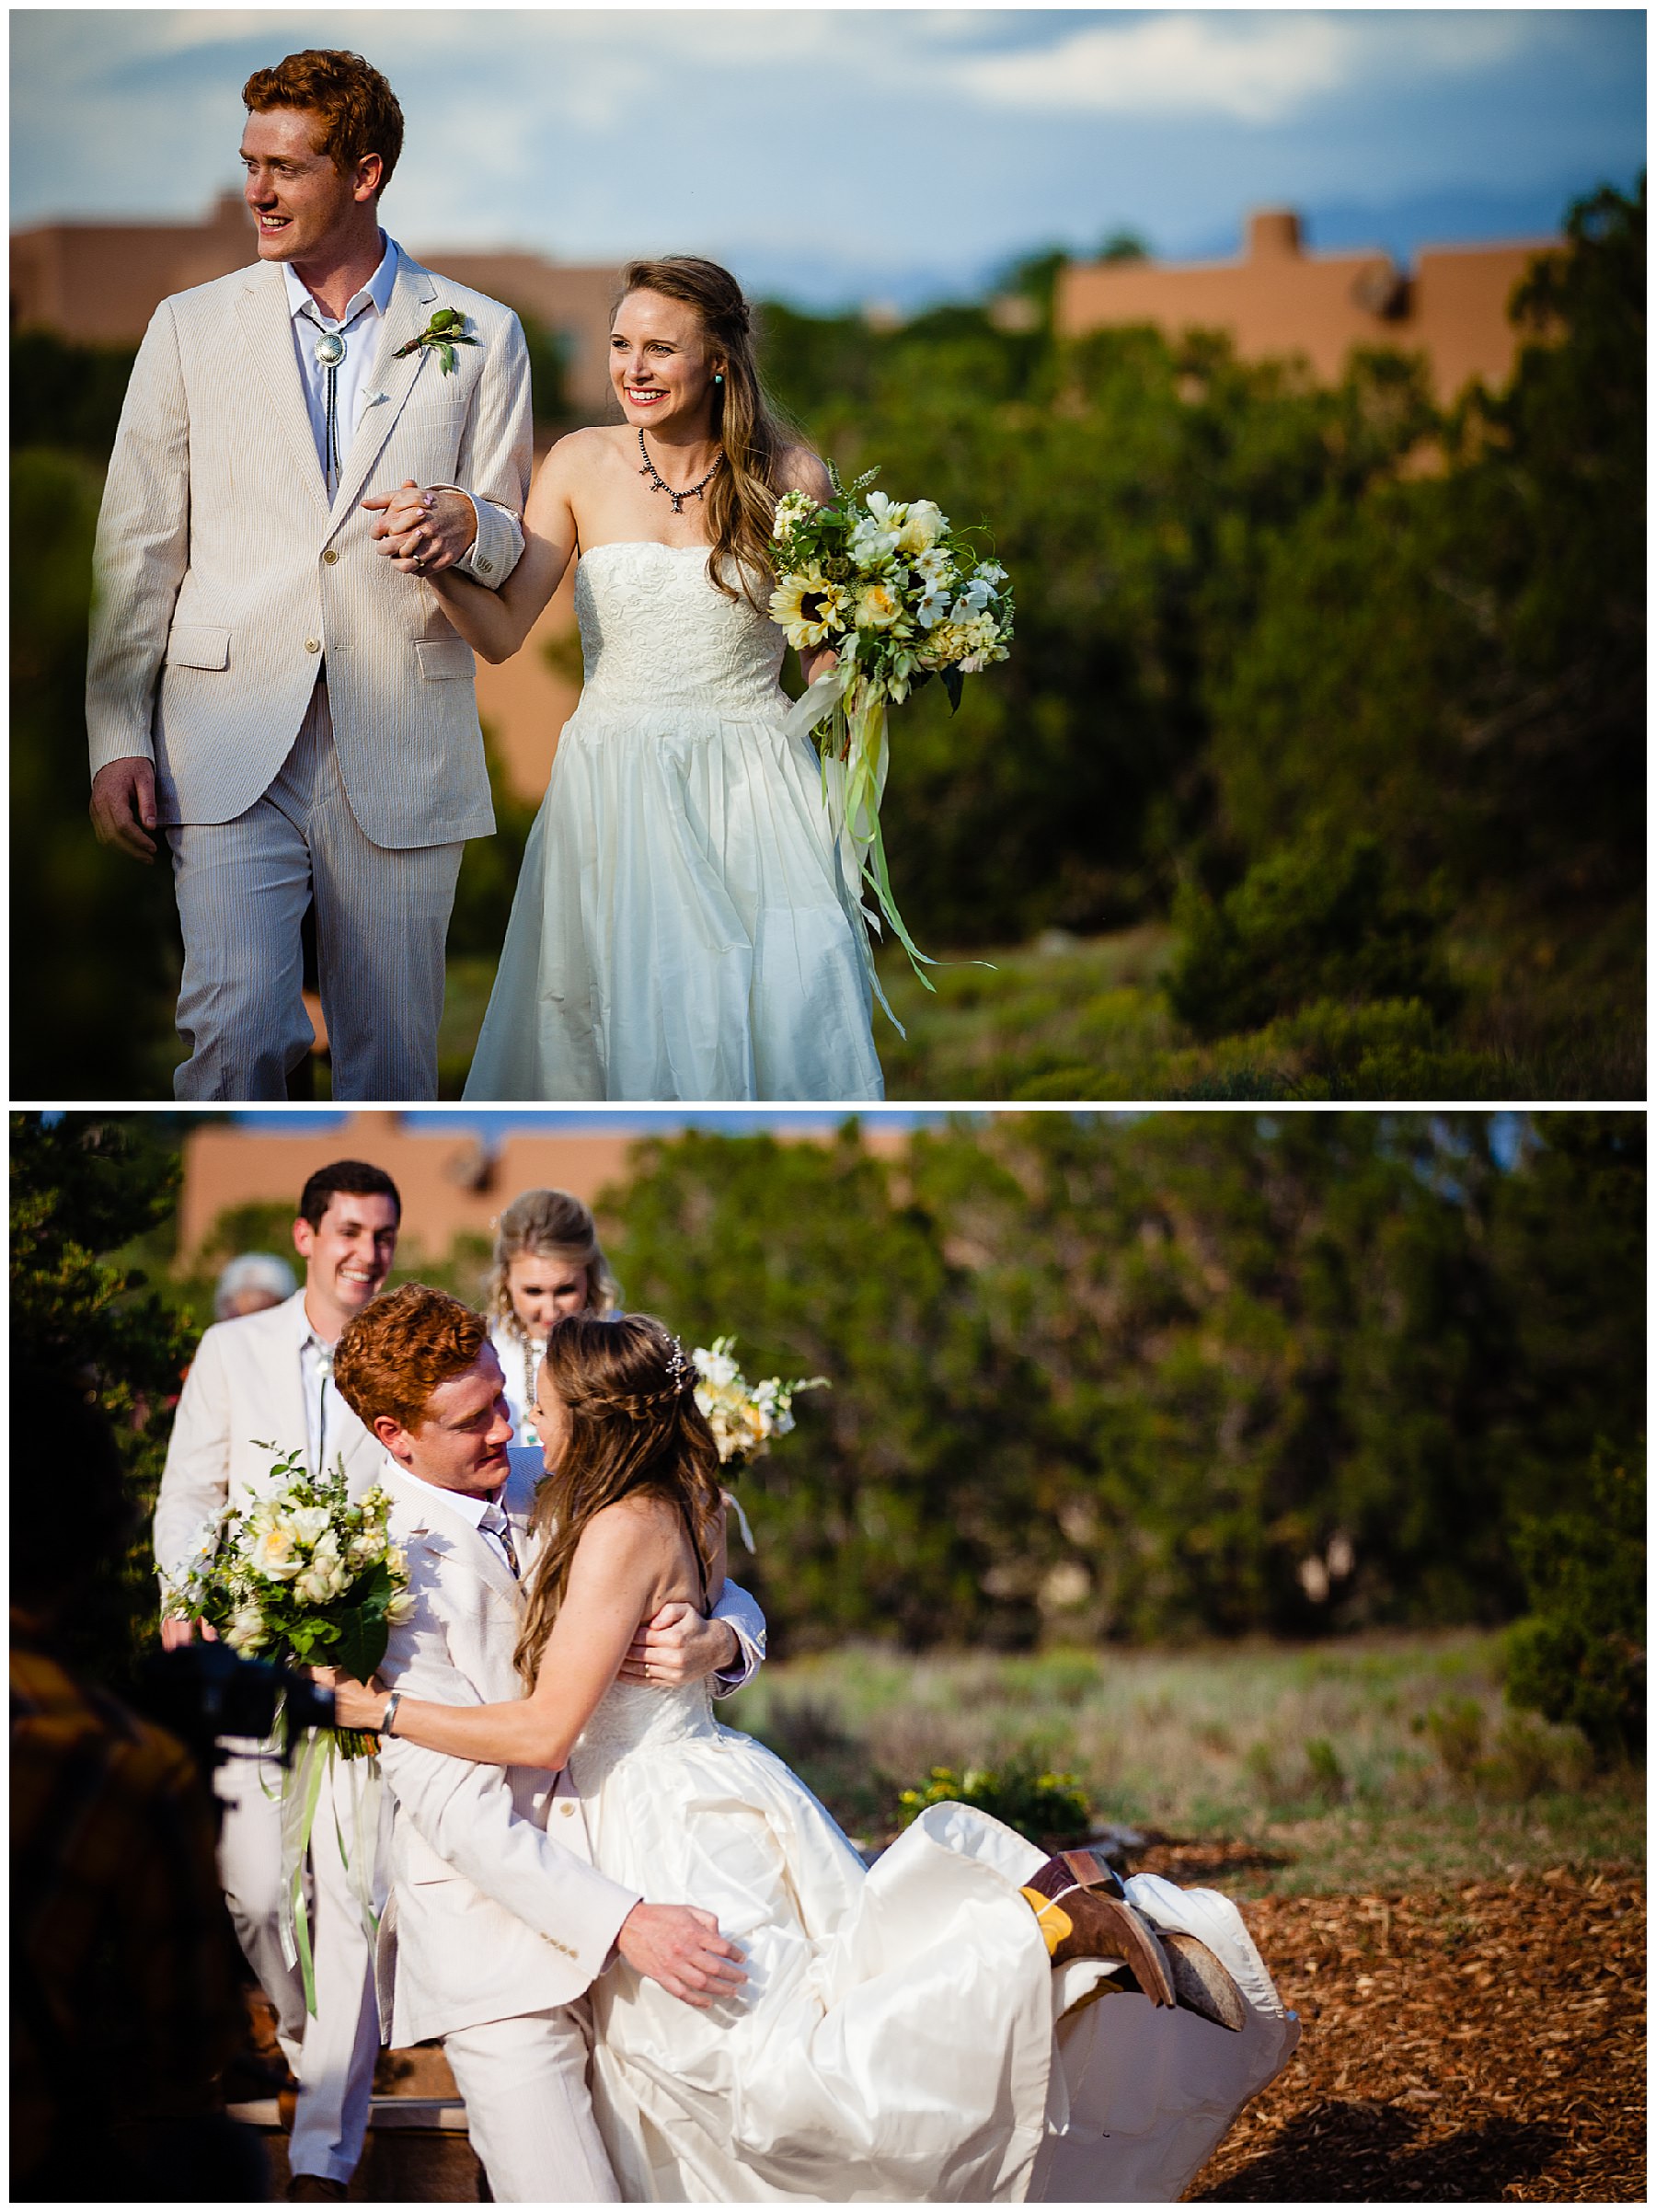 Blue grass inspired wedding in Santa Fe New Mexico